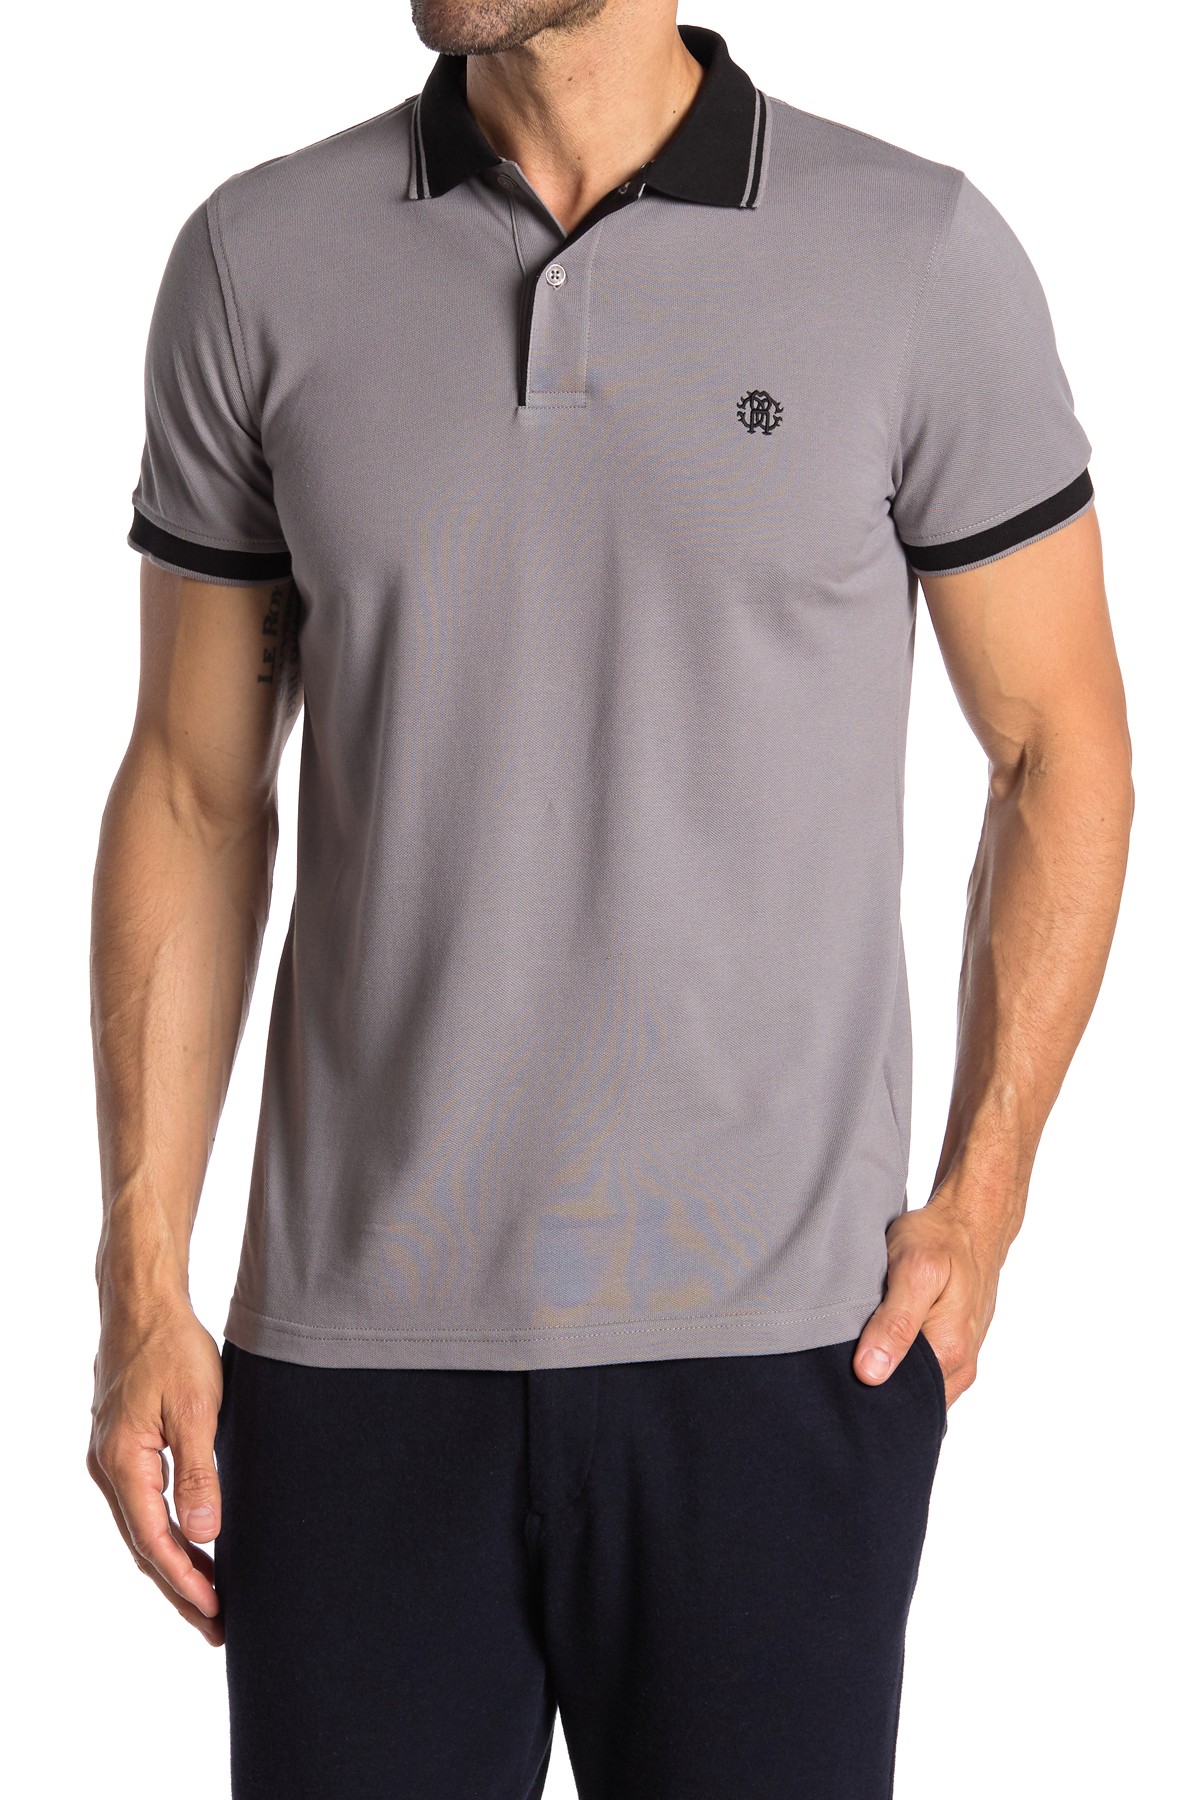 ROBERTO CAVALLI Authentic Chest Pocket Logo Contrast Trim Polo T-Shirt New $325